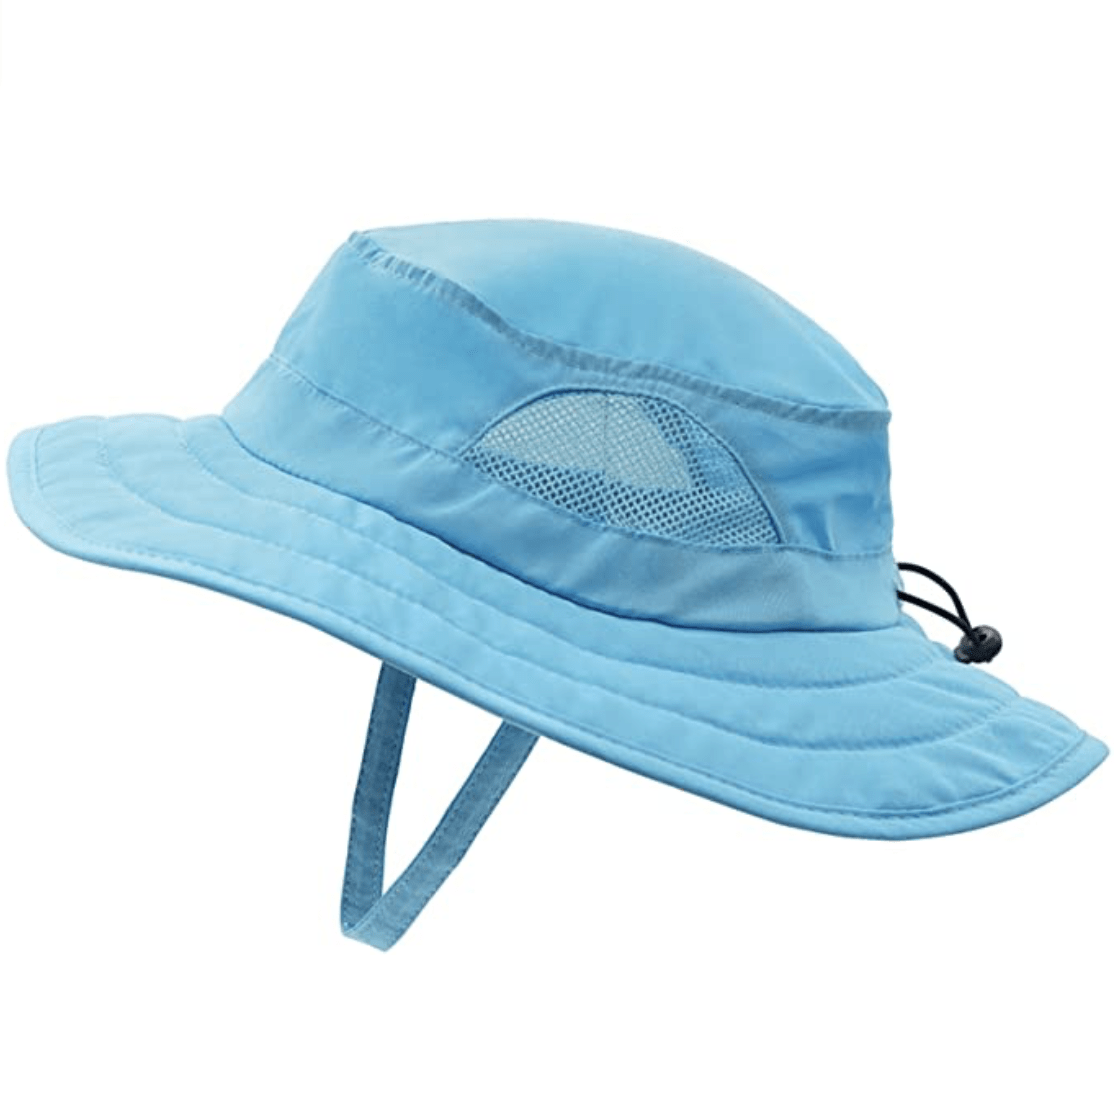 Sun Protection Wide Brim Bucket Hat,Ocean Fun Kids Floppy Hat Printed UPF 50 